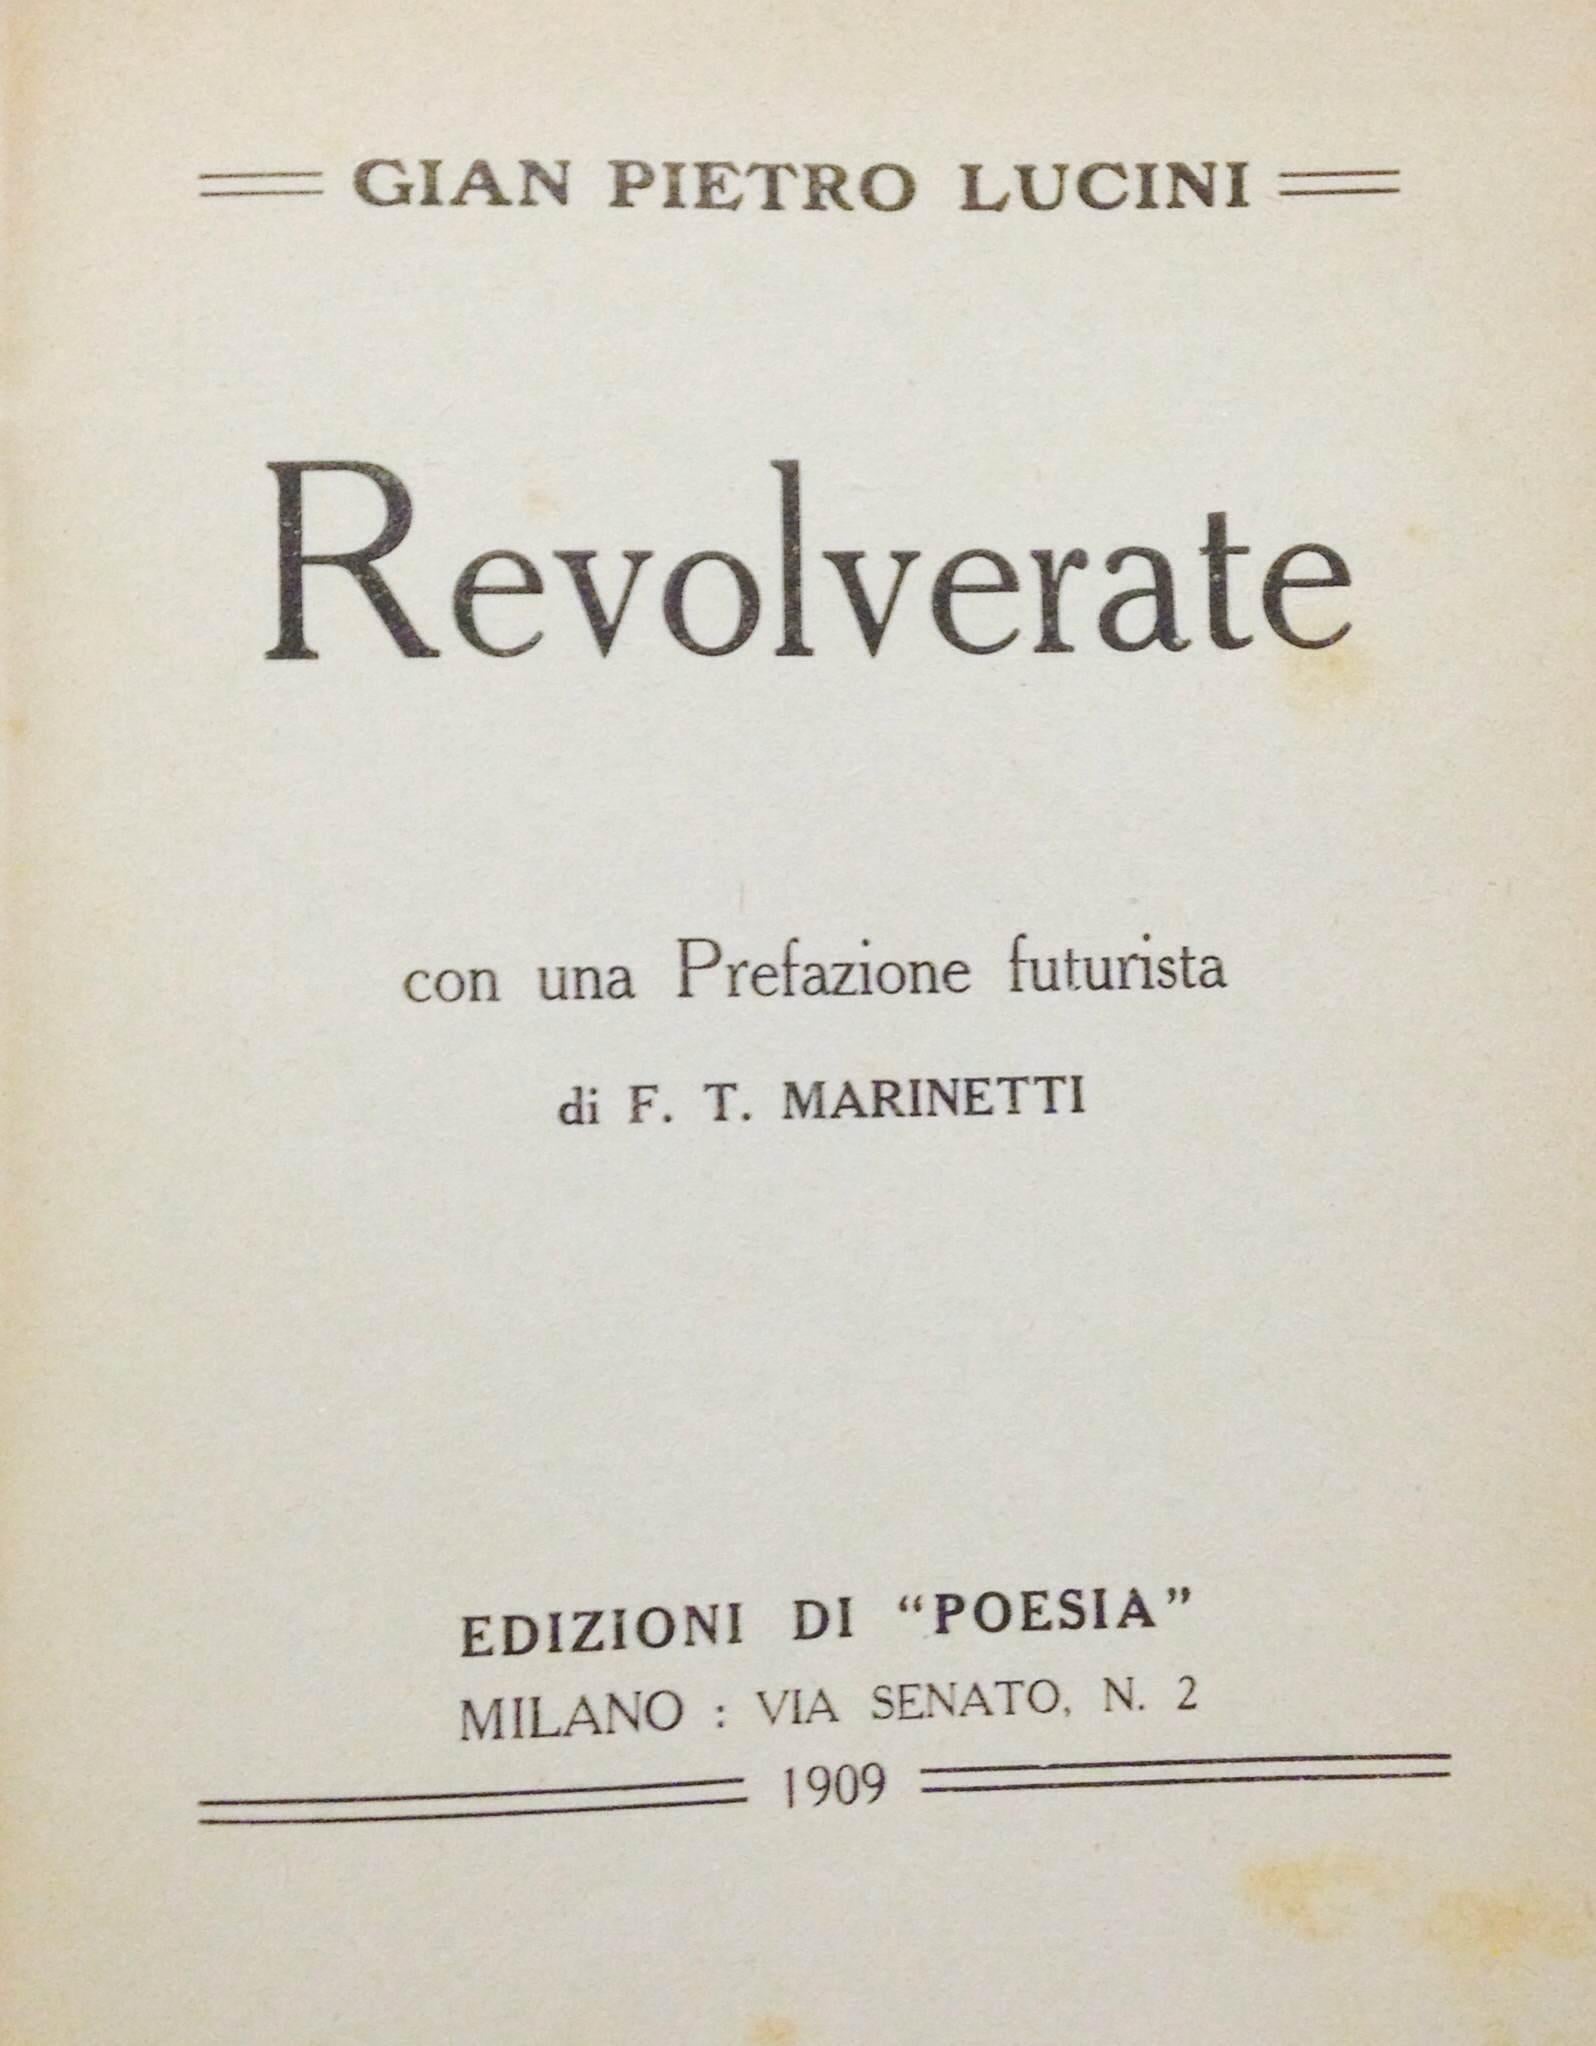 Revolverate - Rare Book Illustrated by Gian Pietro Lucini - 1909 For Sale 2